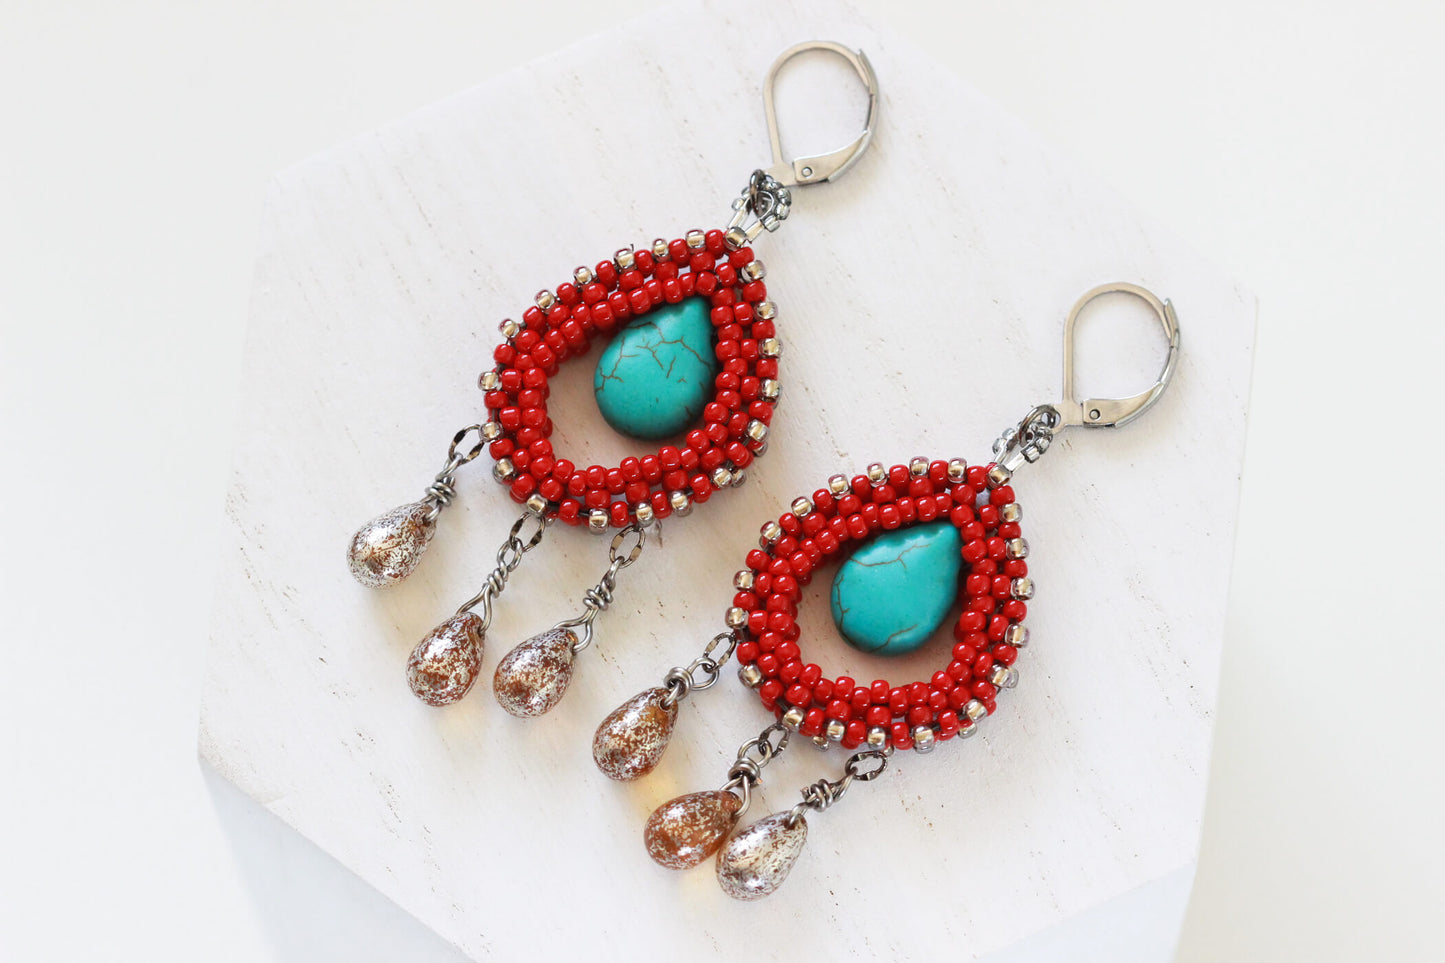 Red Beaded Teardrop Earrings - Frida Kahlo Inspired - Dia De Los Muertos Jewelry by Kaleidoscopes And Polka Dots